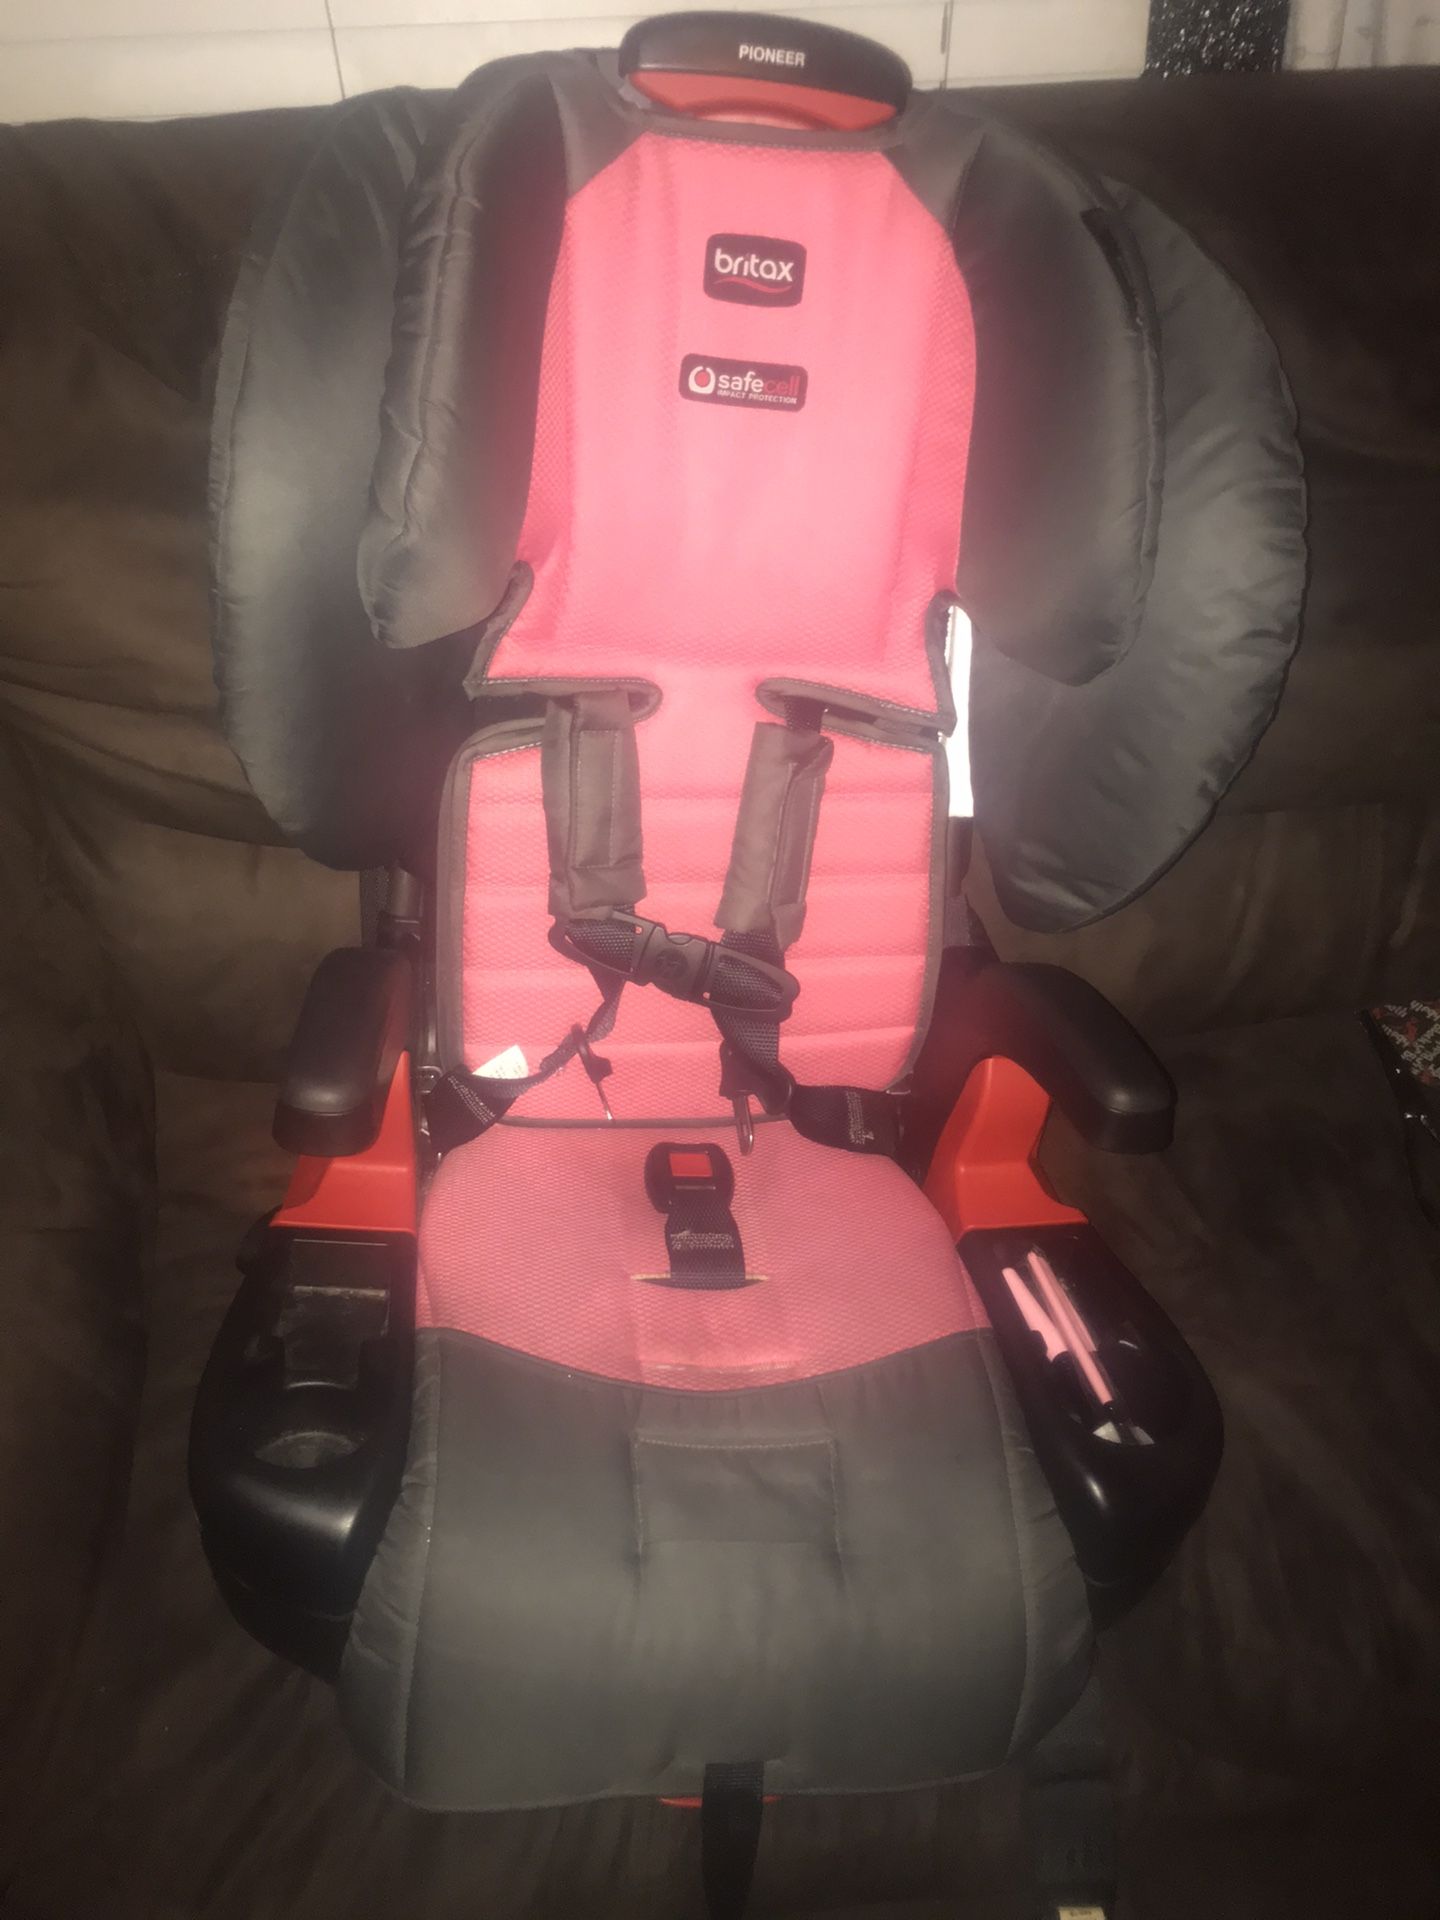 Britax car seat safe cell